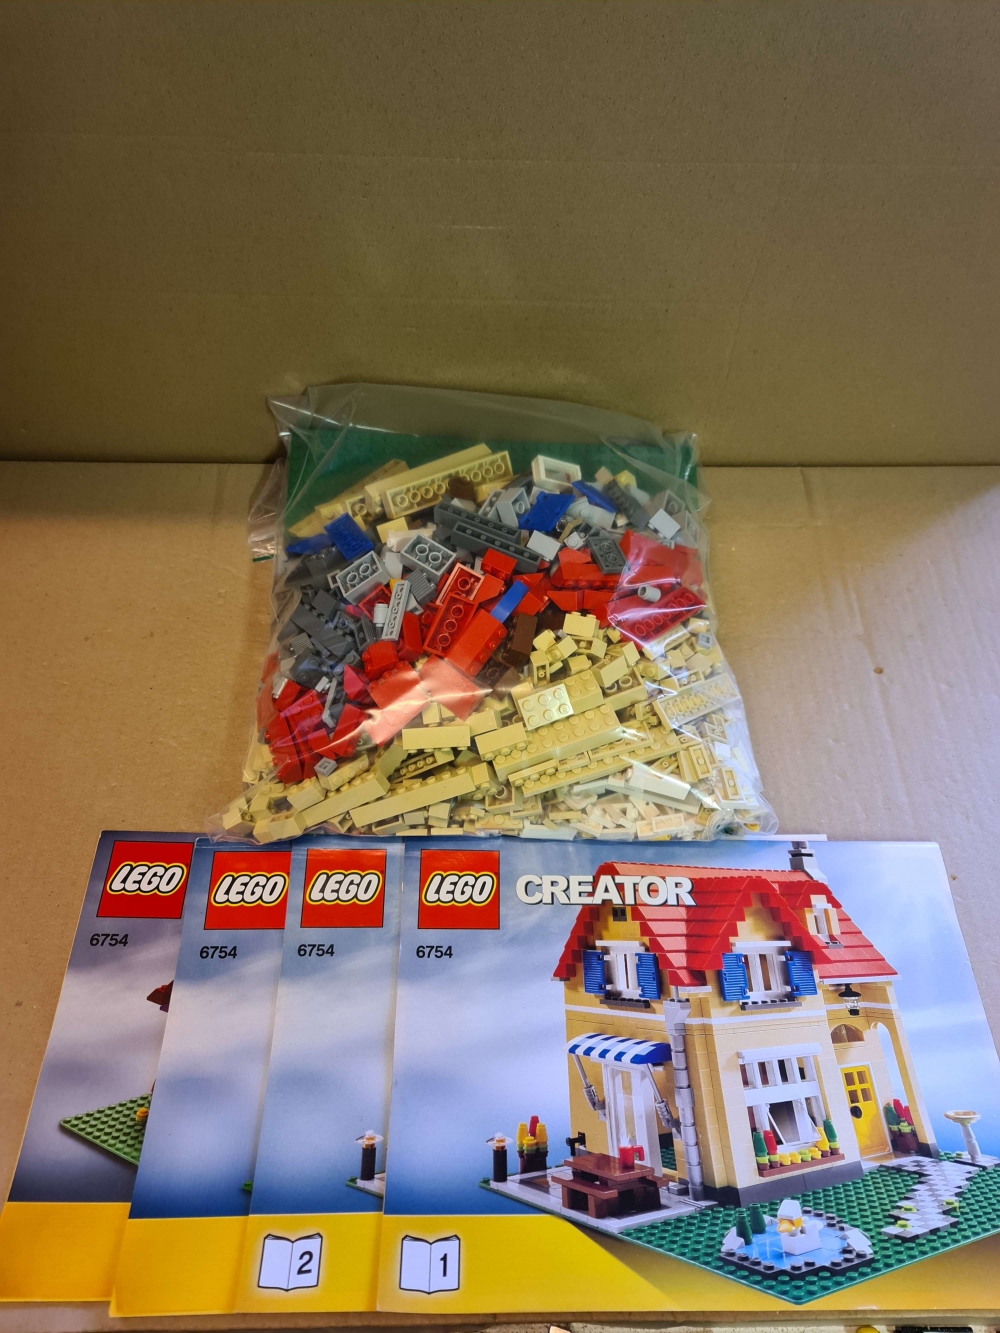 Sett 6754 fra Lego Creator : Model : Building serien.
Meget pent. Litt støv.
Komplett med manual.